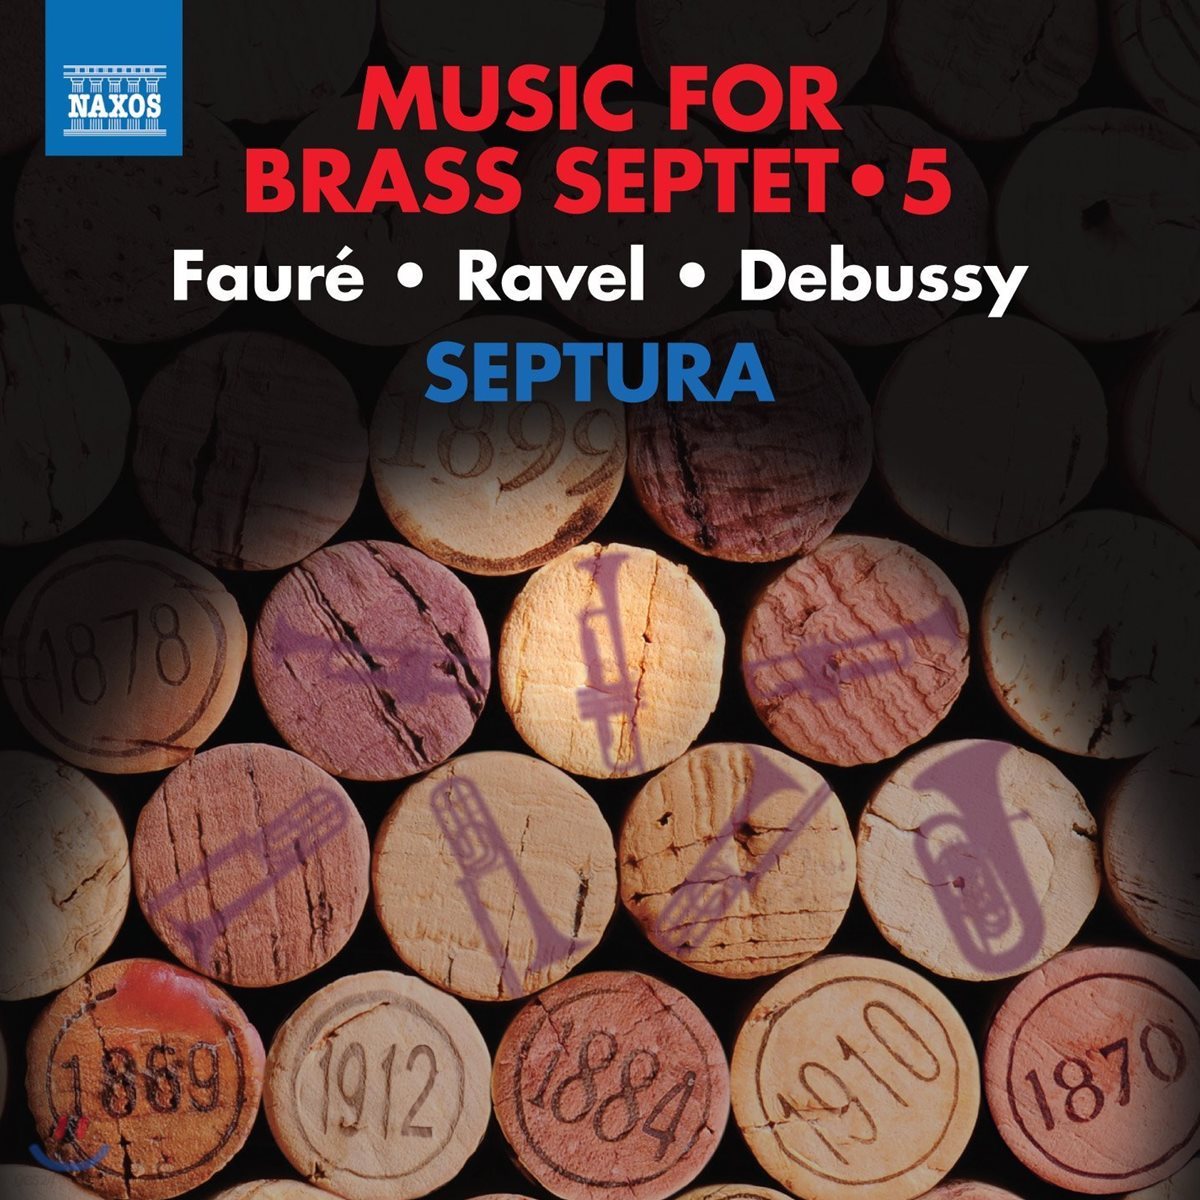 Septura 셉투라 - 금관 7중주를 위한 음악 5집: 프랑스 인상주의 음악 - 포레 / 라벨 / 드뷔시 (Music for Brass Septet 5 - Faure / Ravel / Debussy)